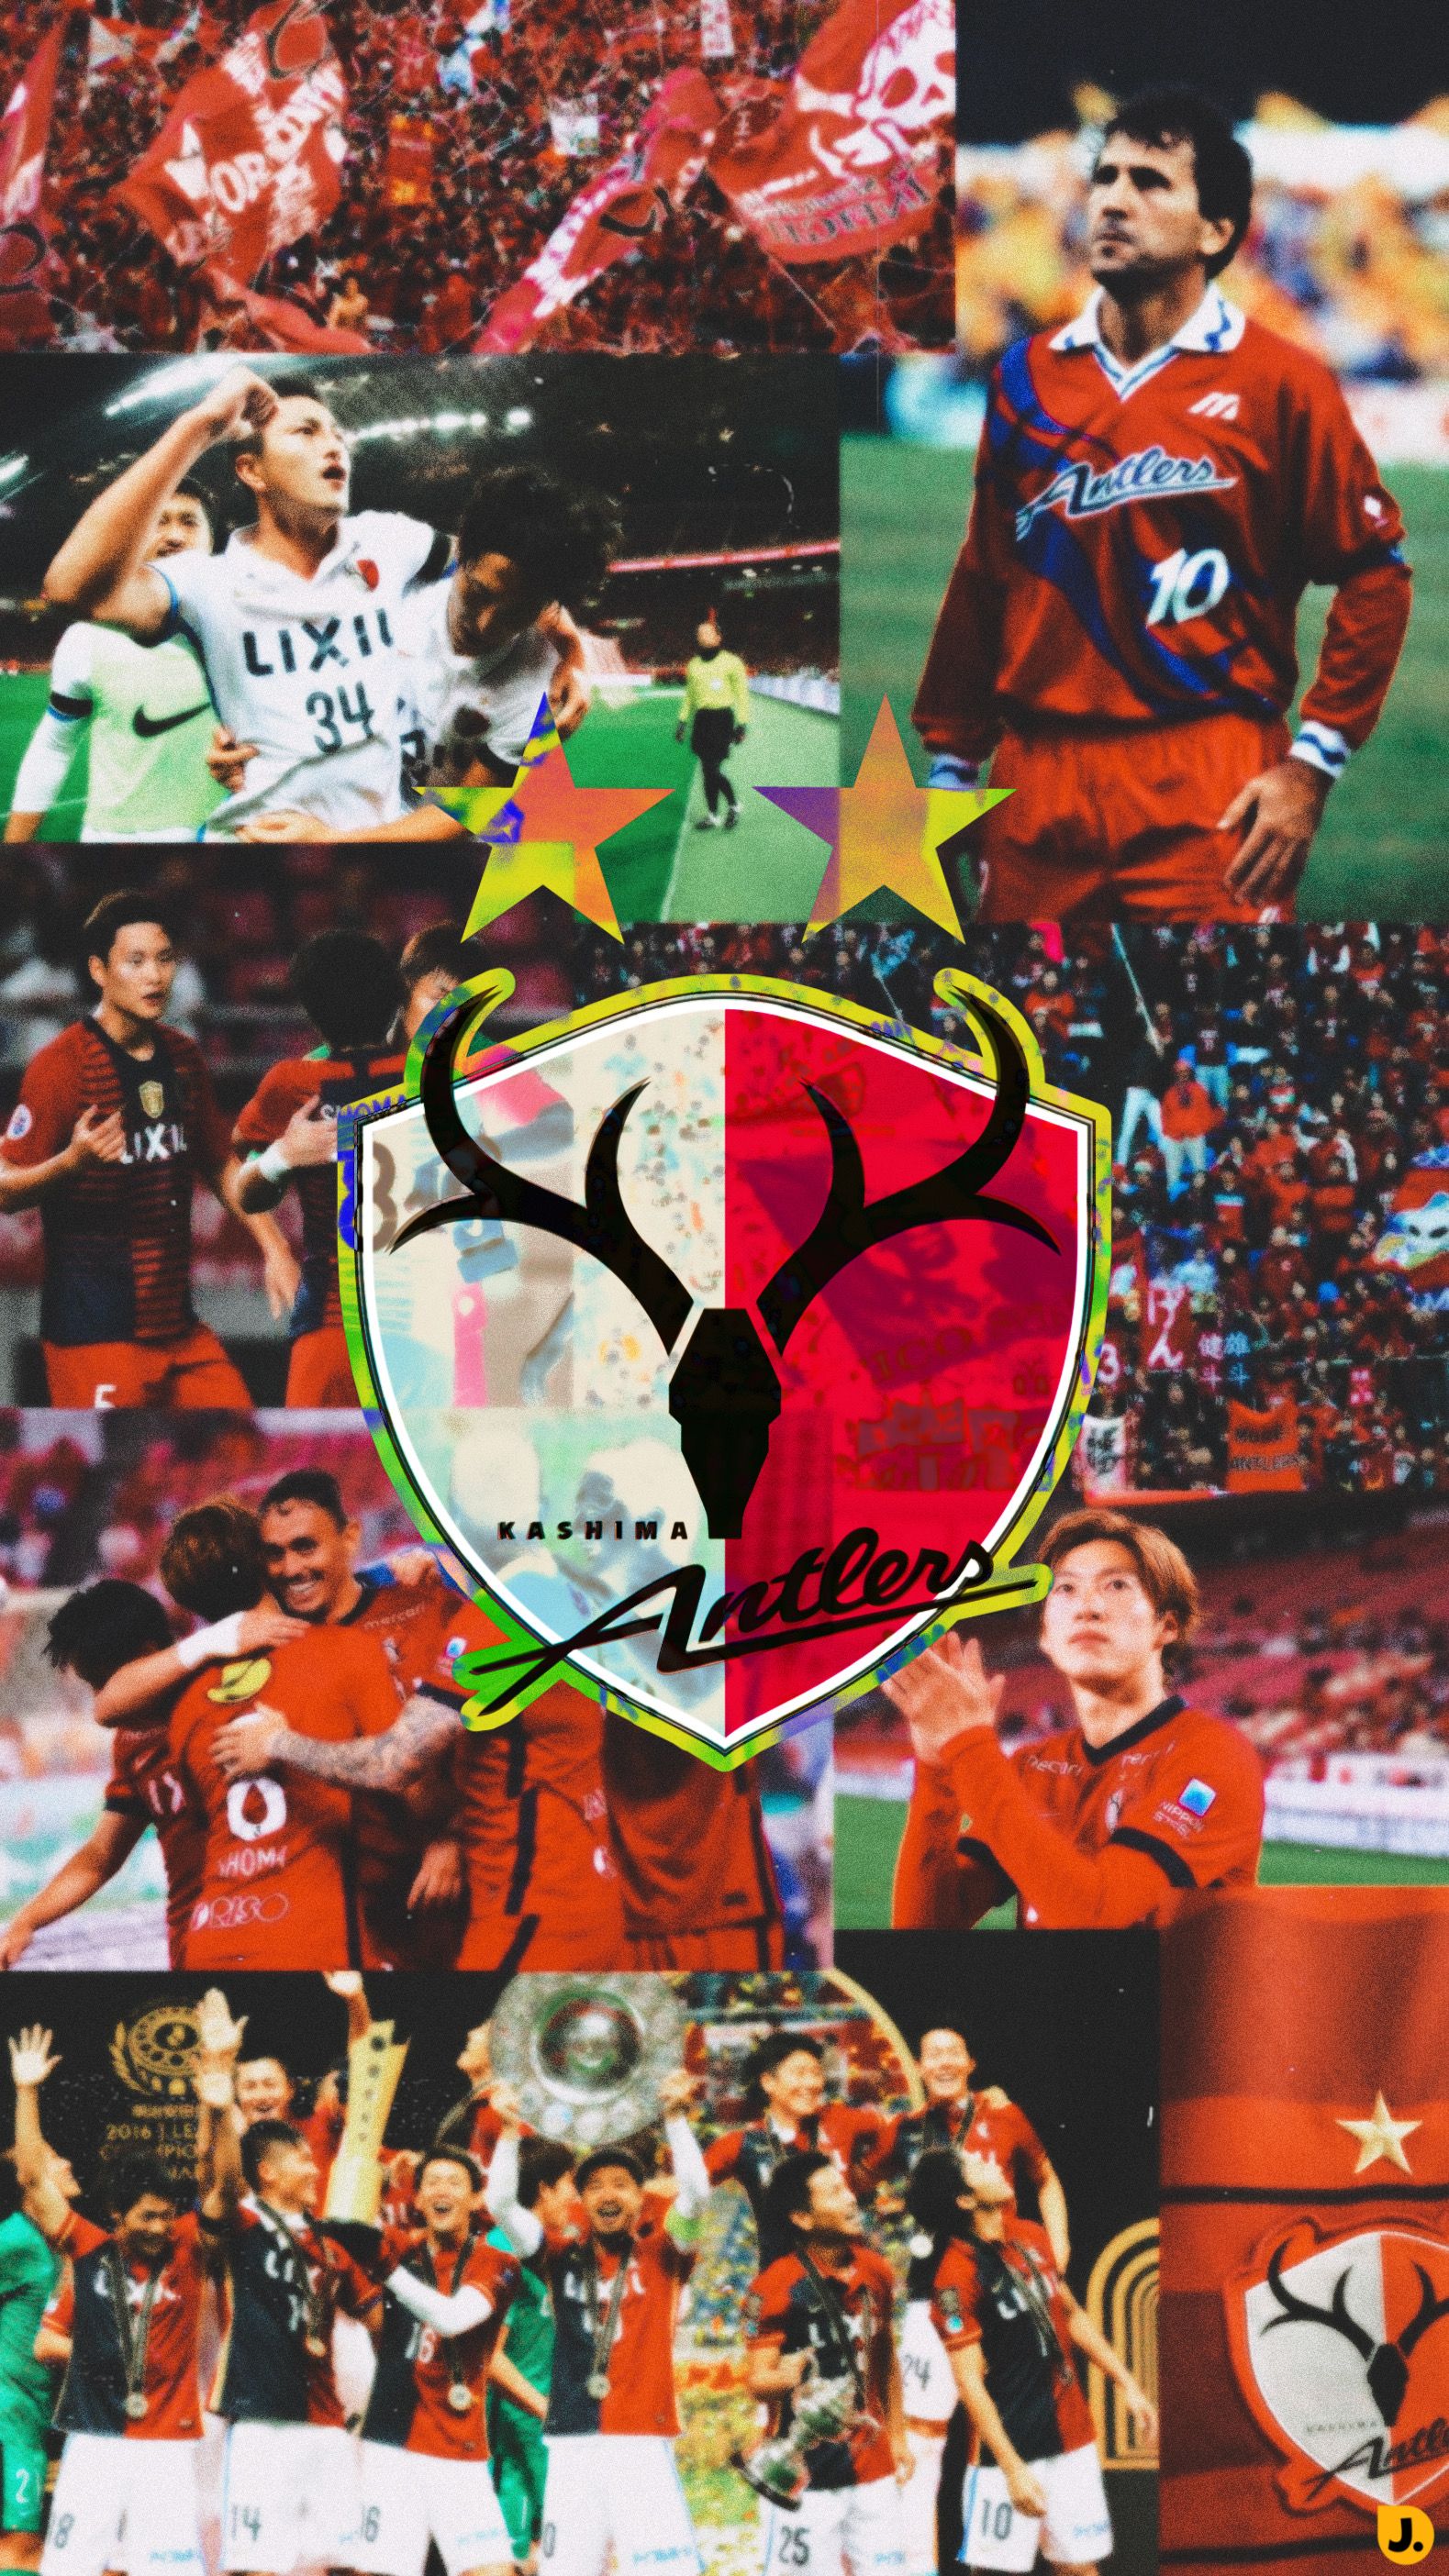 Kashima Antlers F.C. Wallpapers